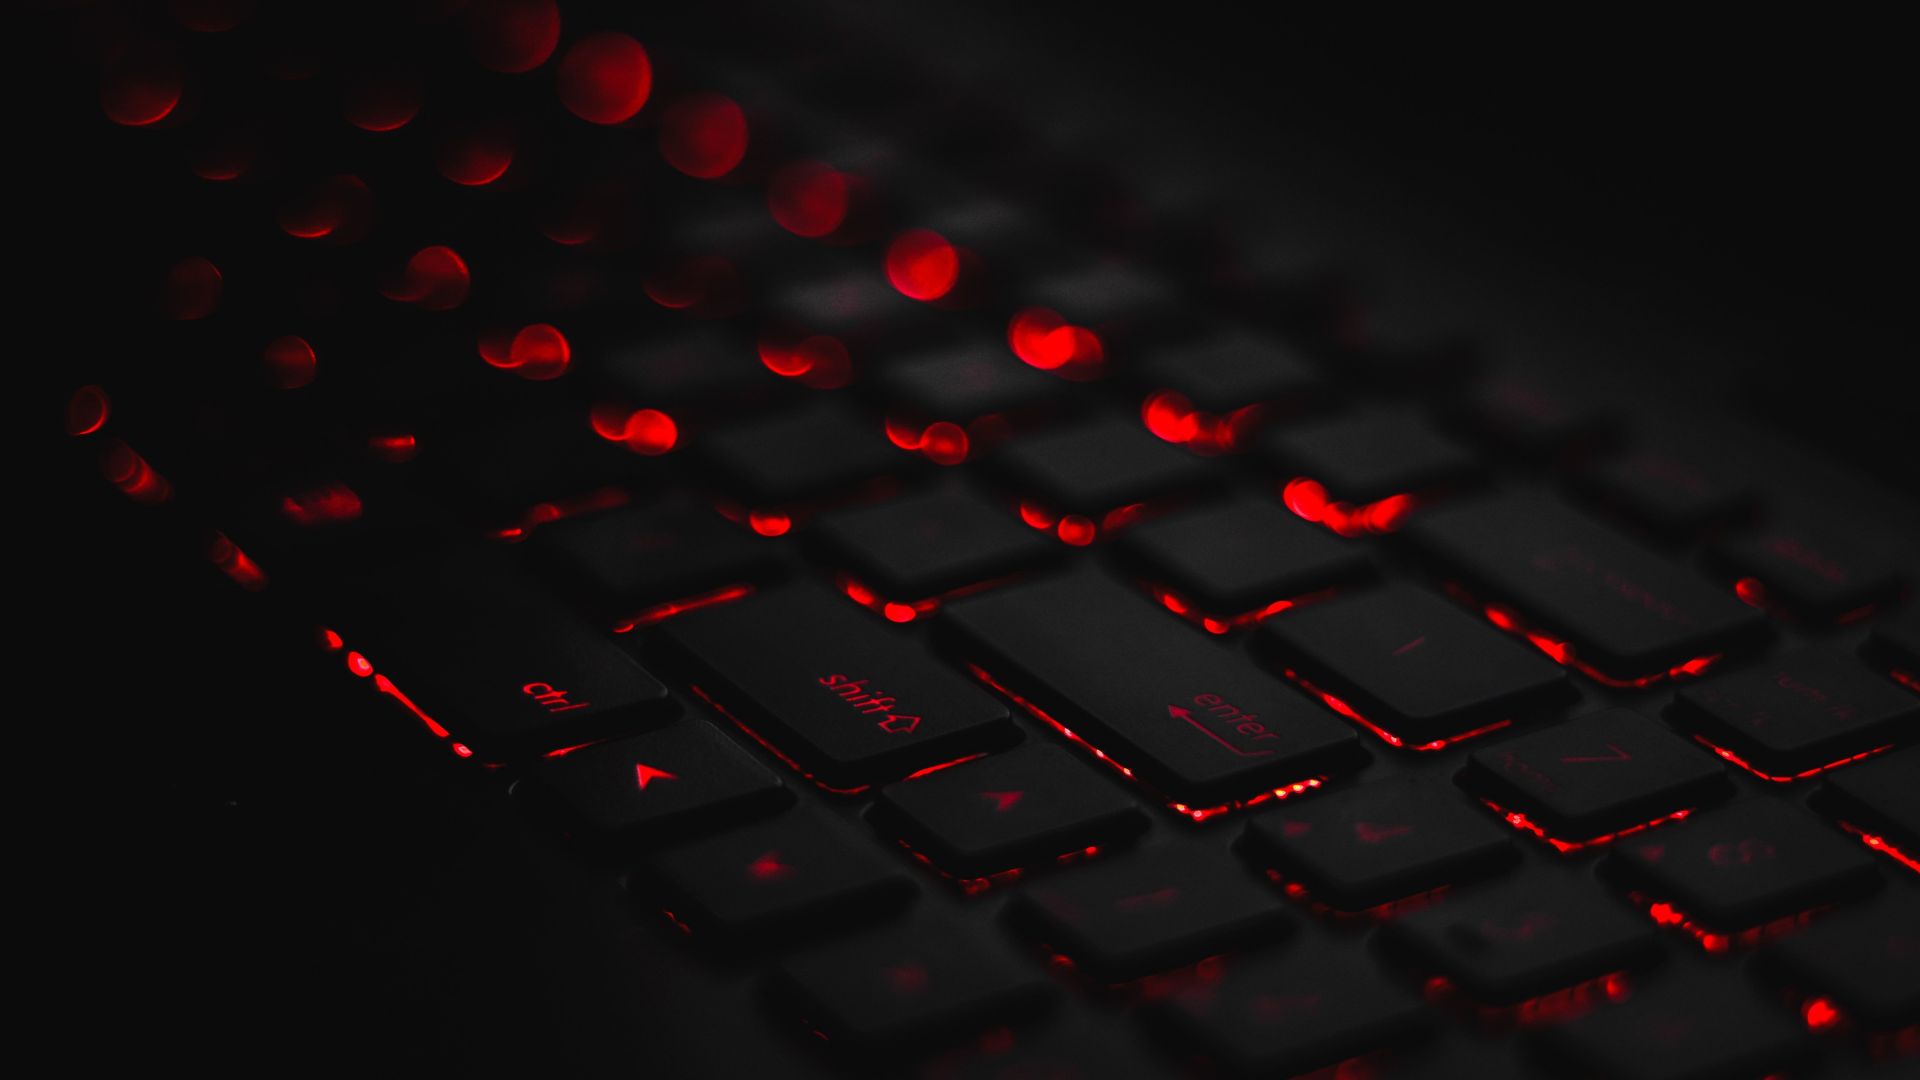 Keyboard, dark, red glow wallpaper, HD image, picture, background, fcf931